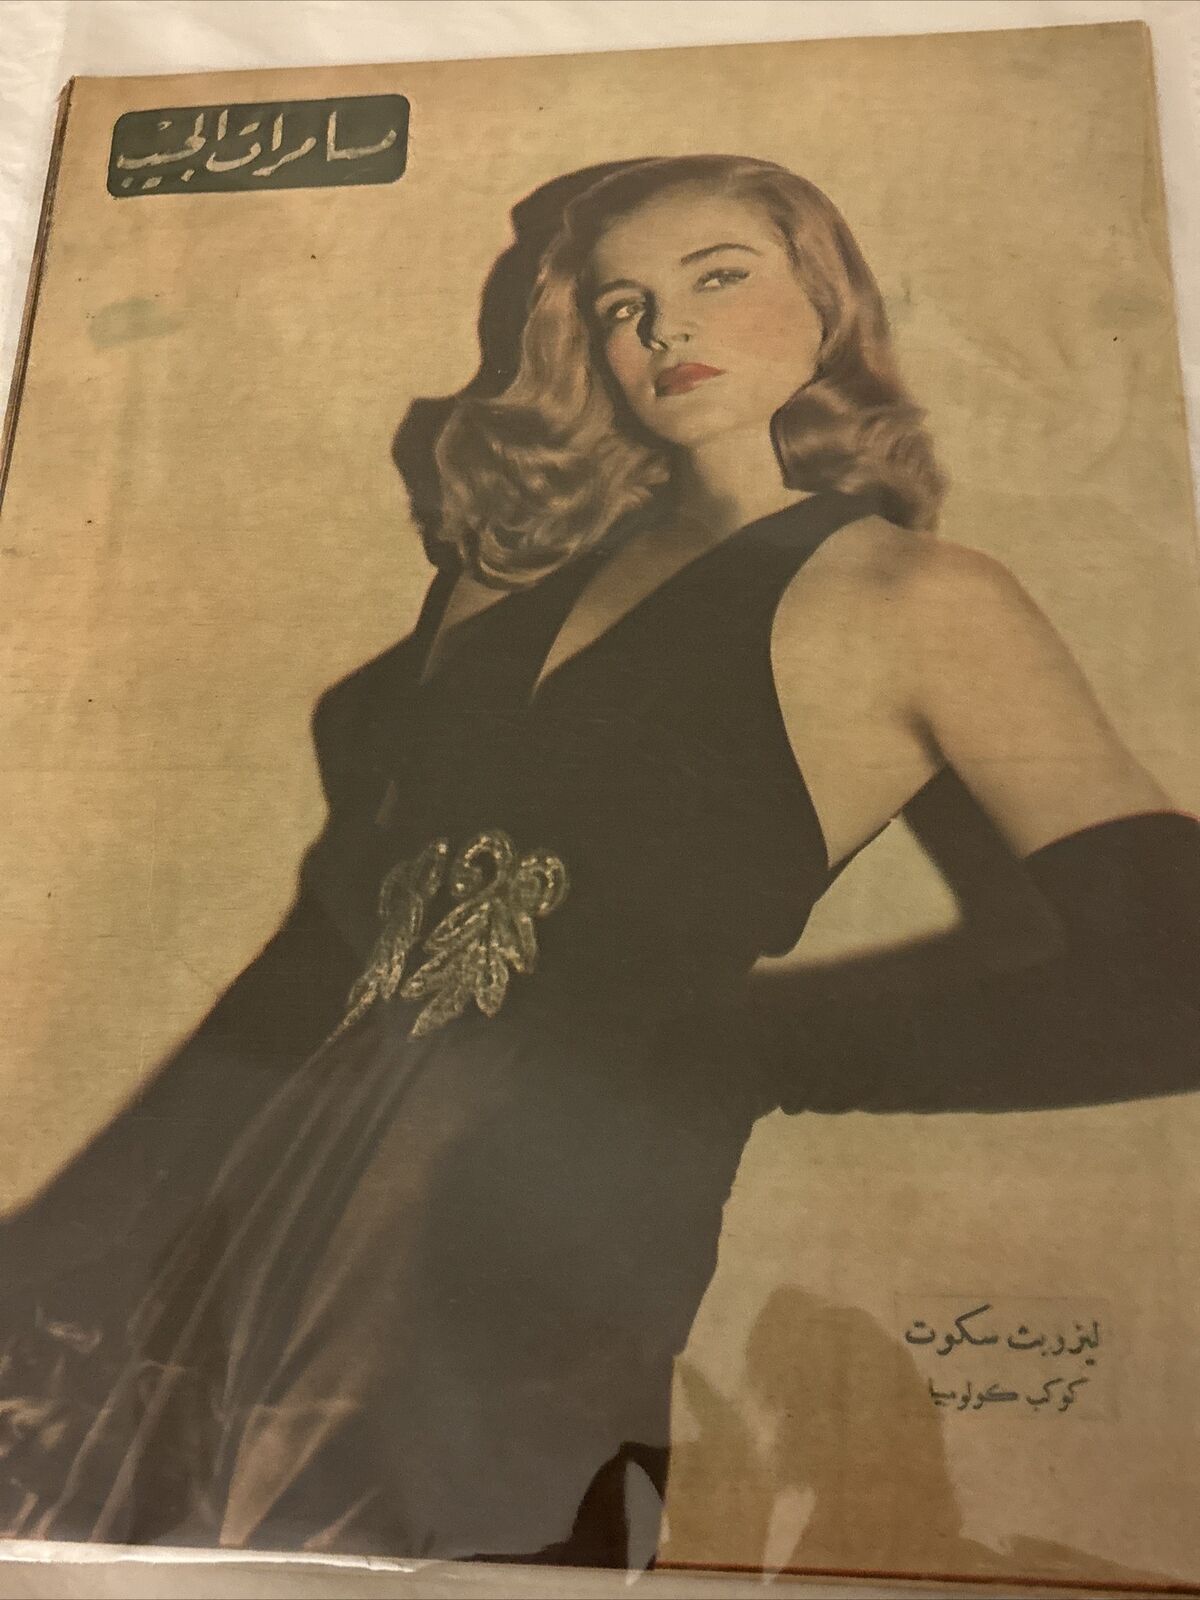 1946 Arabic Magazine Actress Lizabeth Scott Cover Scarce Hollywood